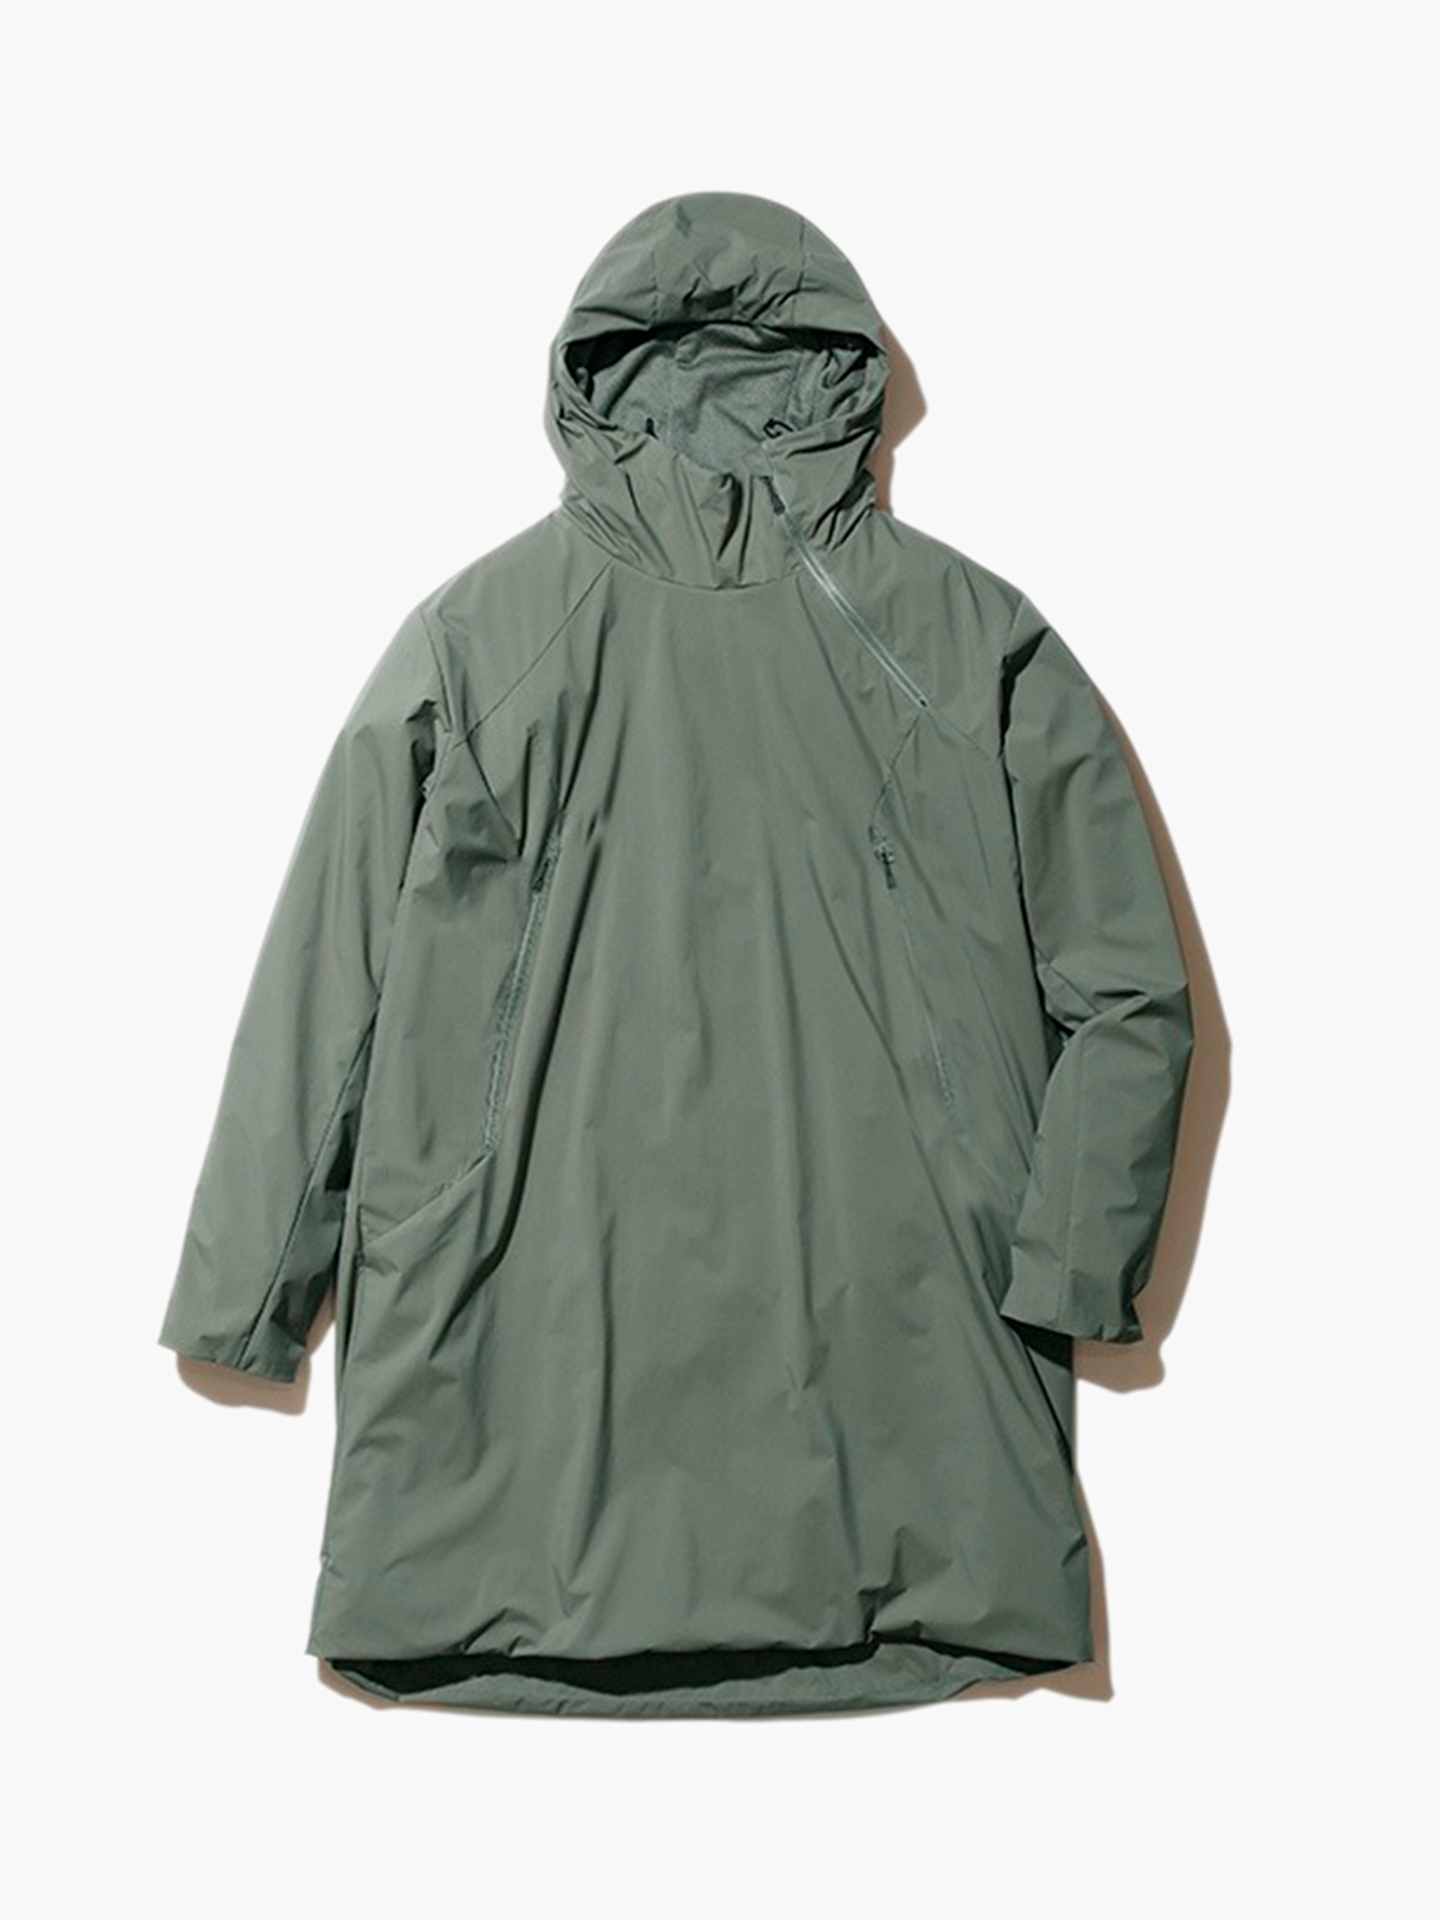 2L Octa Long Hoodie Куртка-анорак, муж, размер XL, хаки